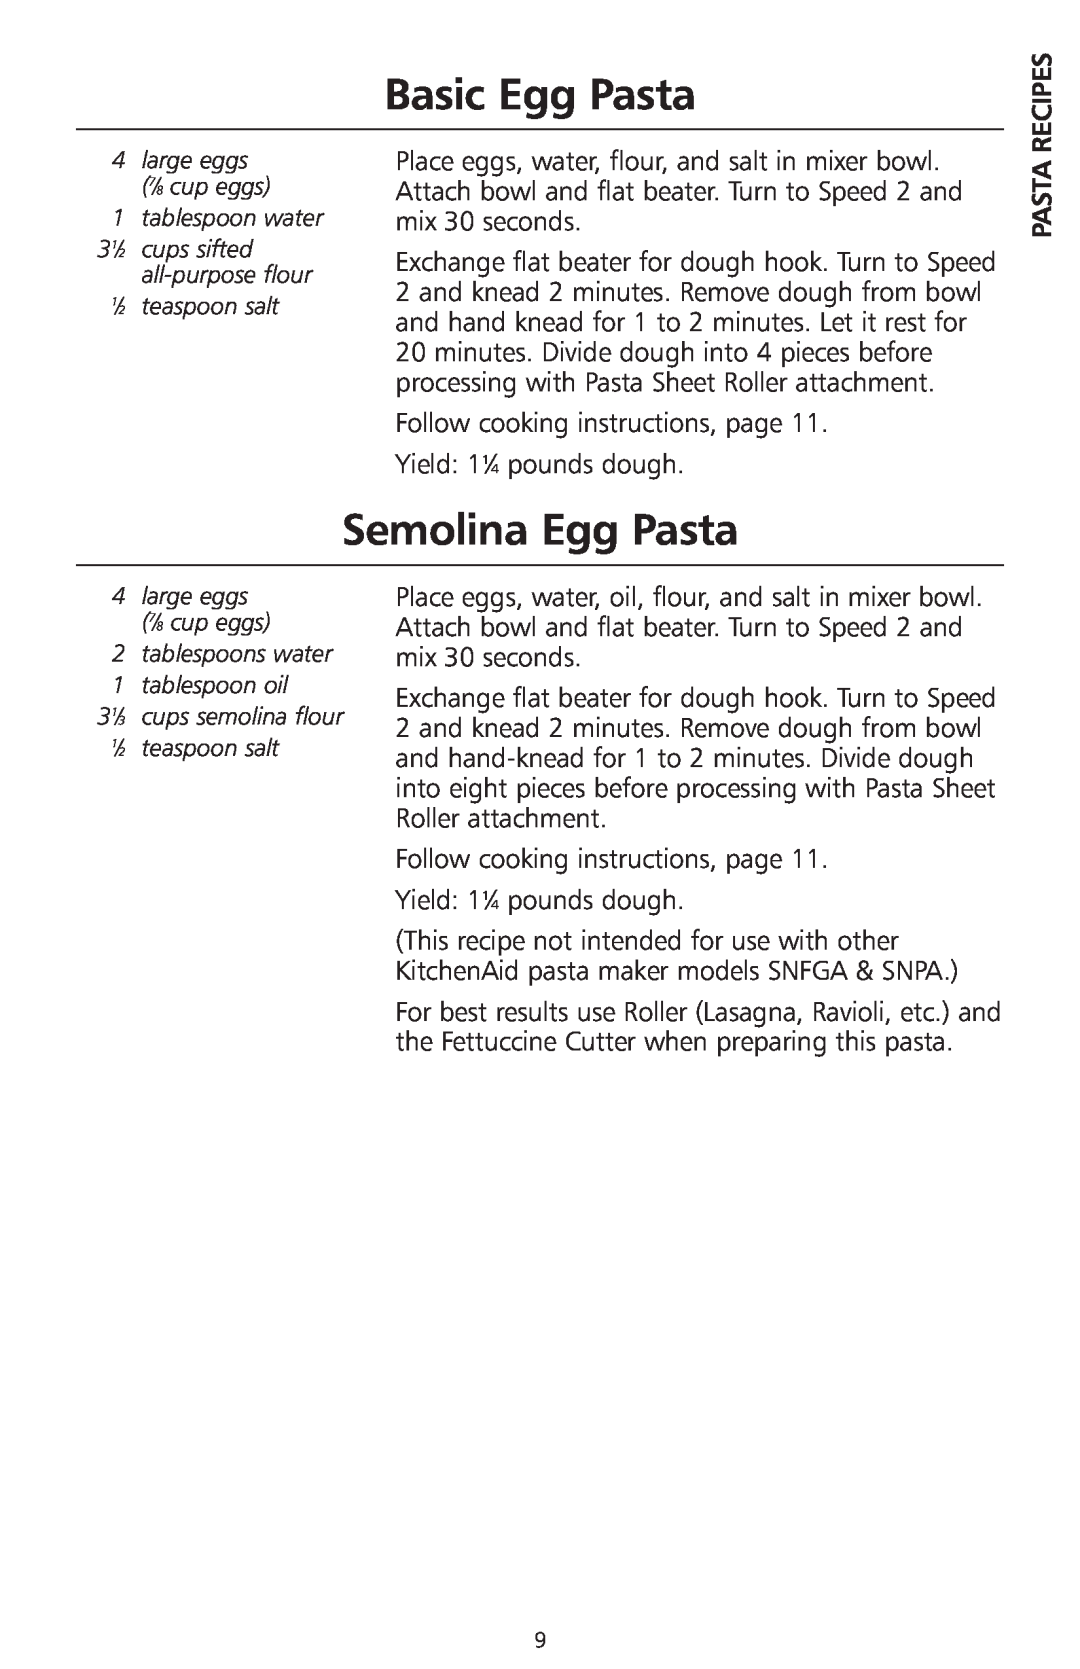 KitchenAid KPRA manual Basic Egg Pasta, Semolina Egg Pasta, Recipes 